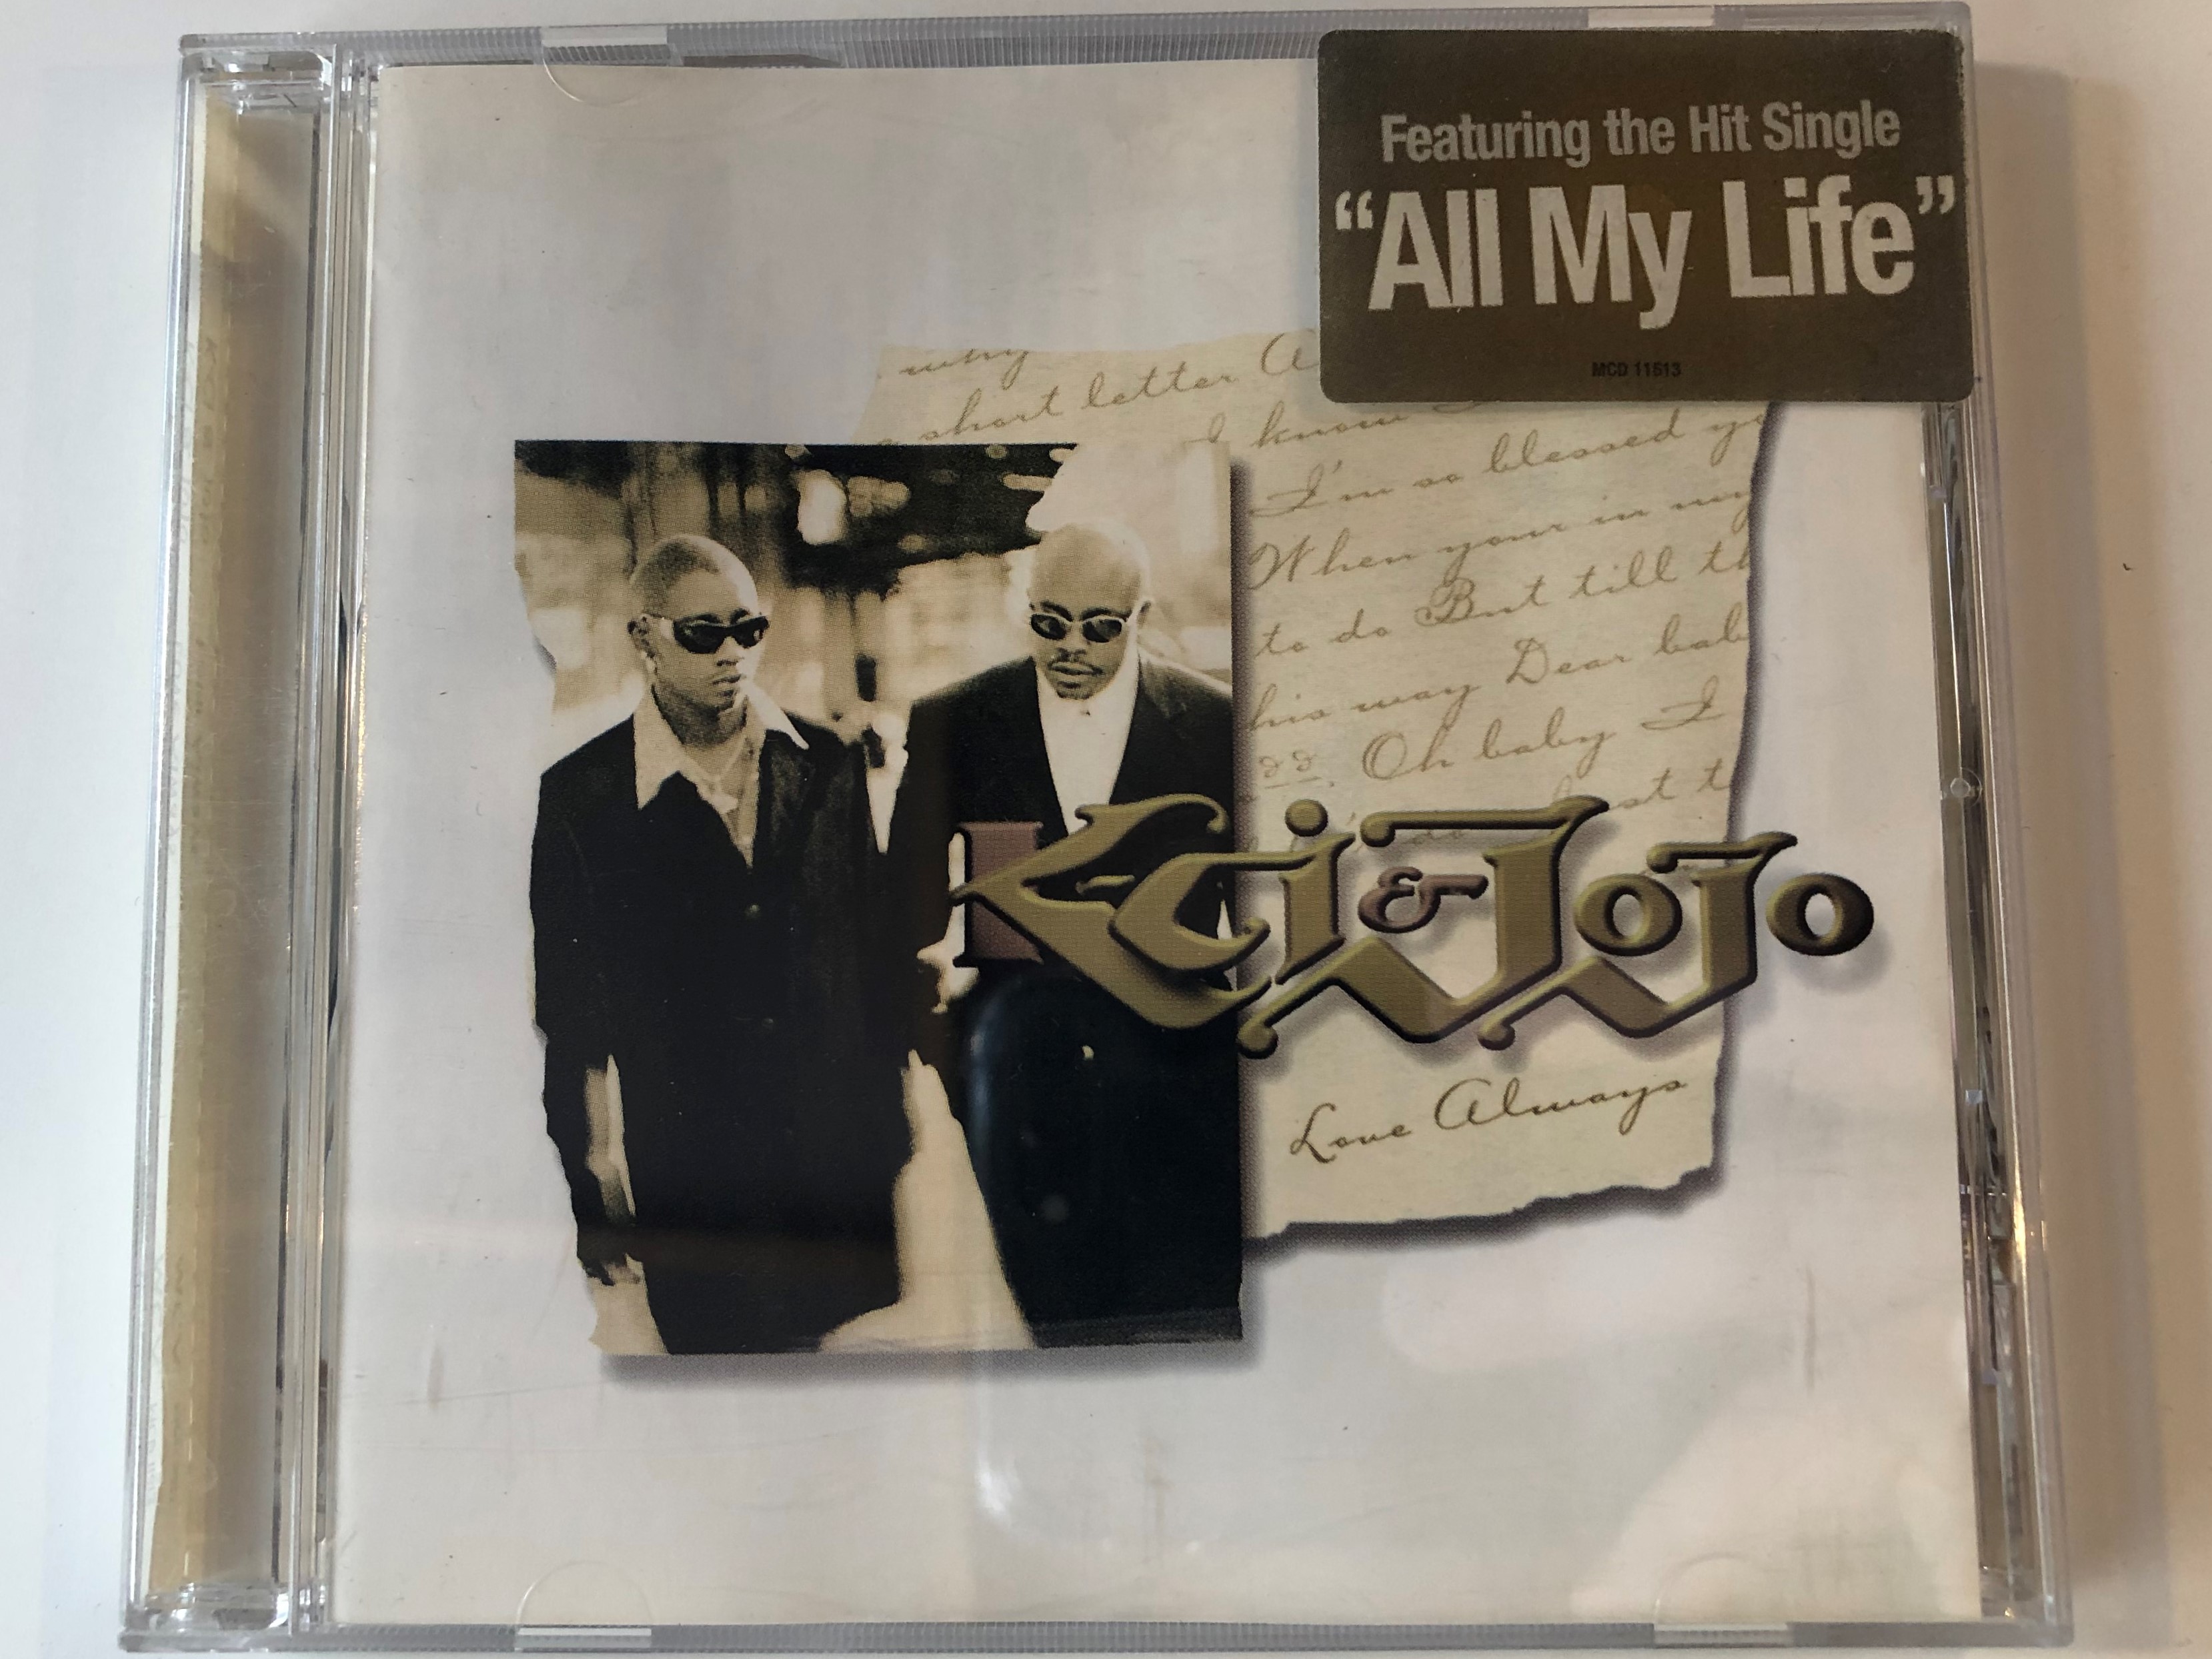 k-ci-jojo-love-always-featuring-the-hit-single-all-my-life-mca-records-audio-cd-1997-mcd-11613-1-.jpg